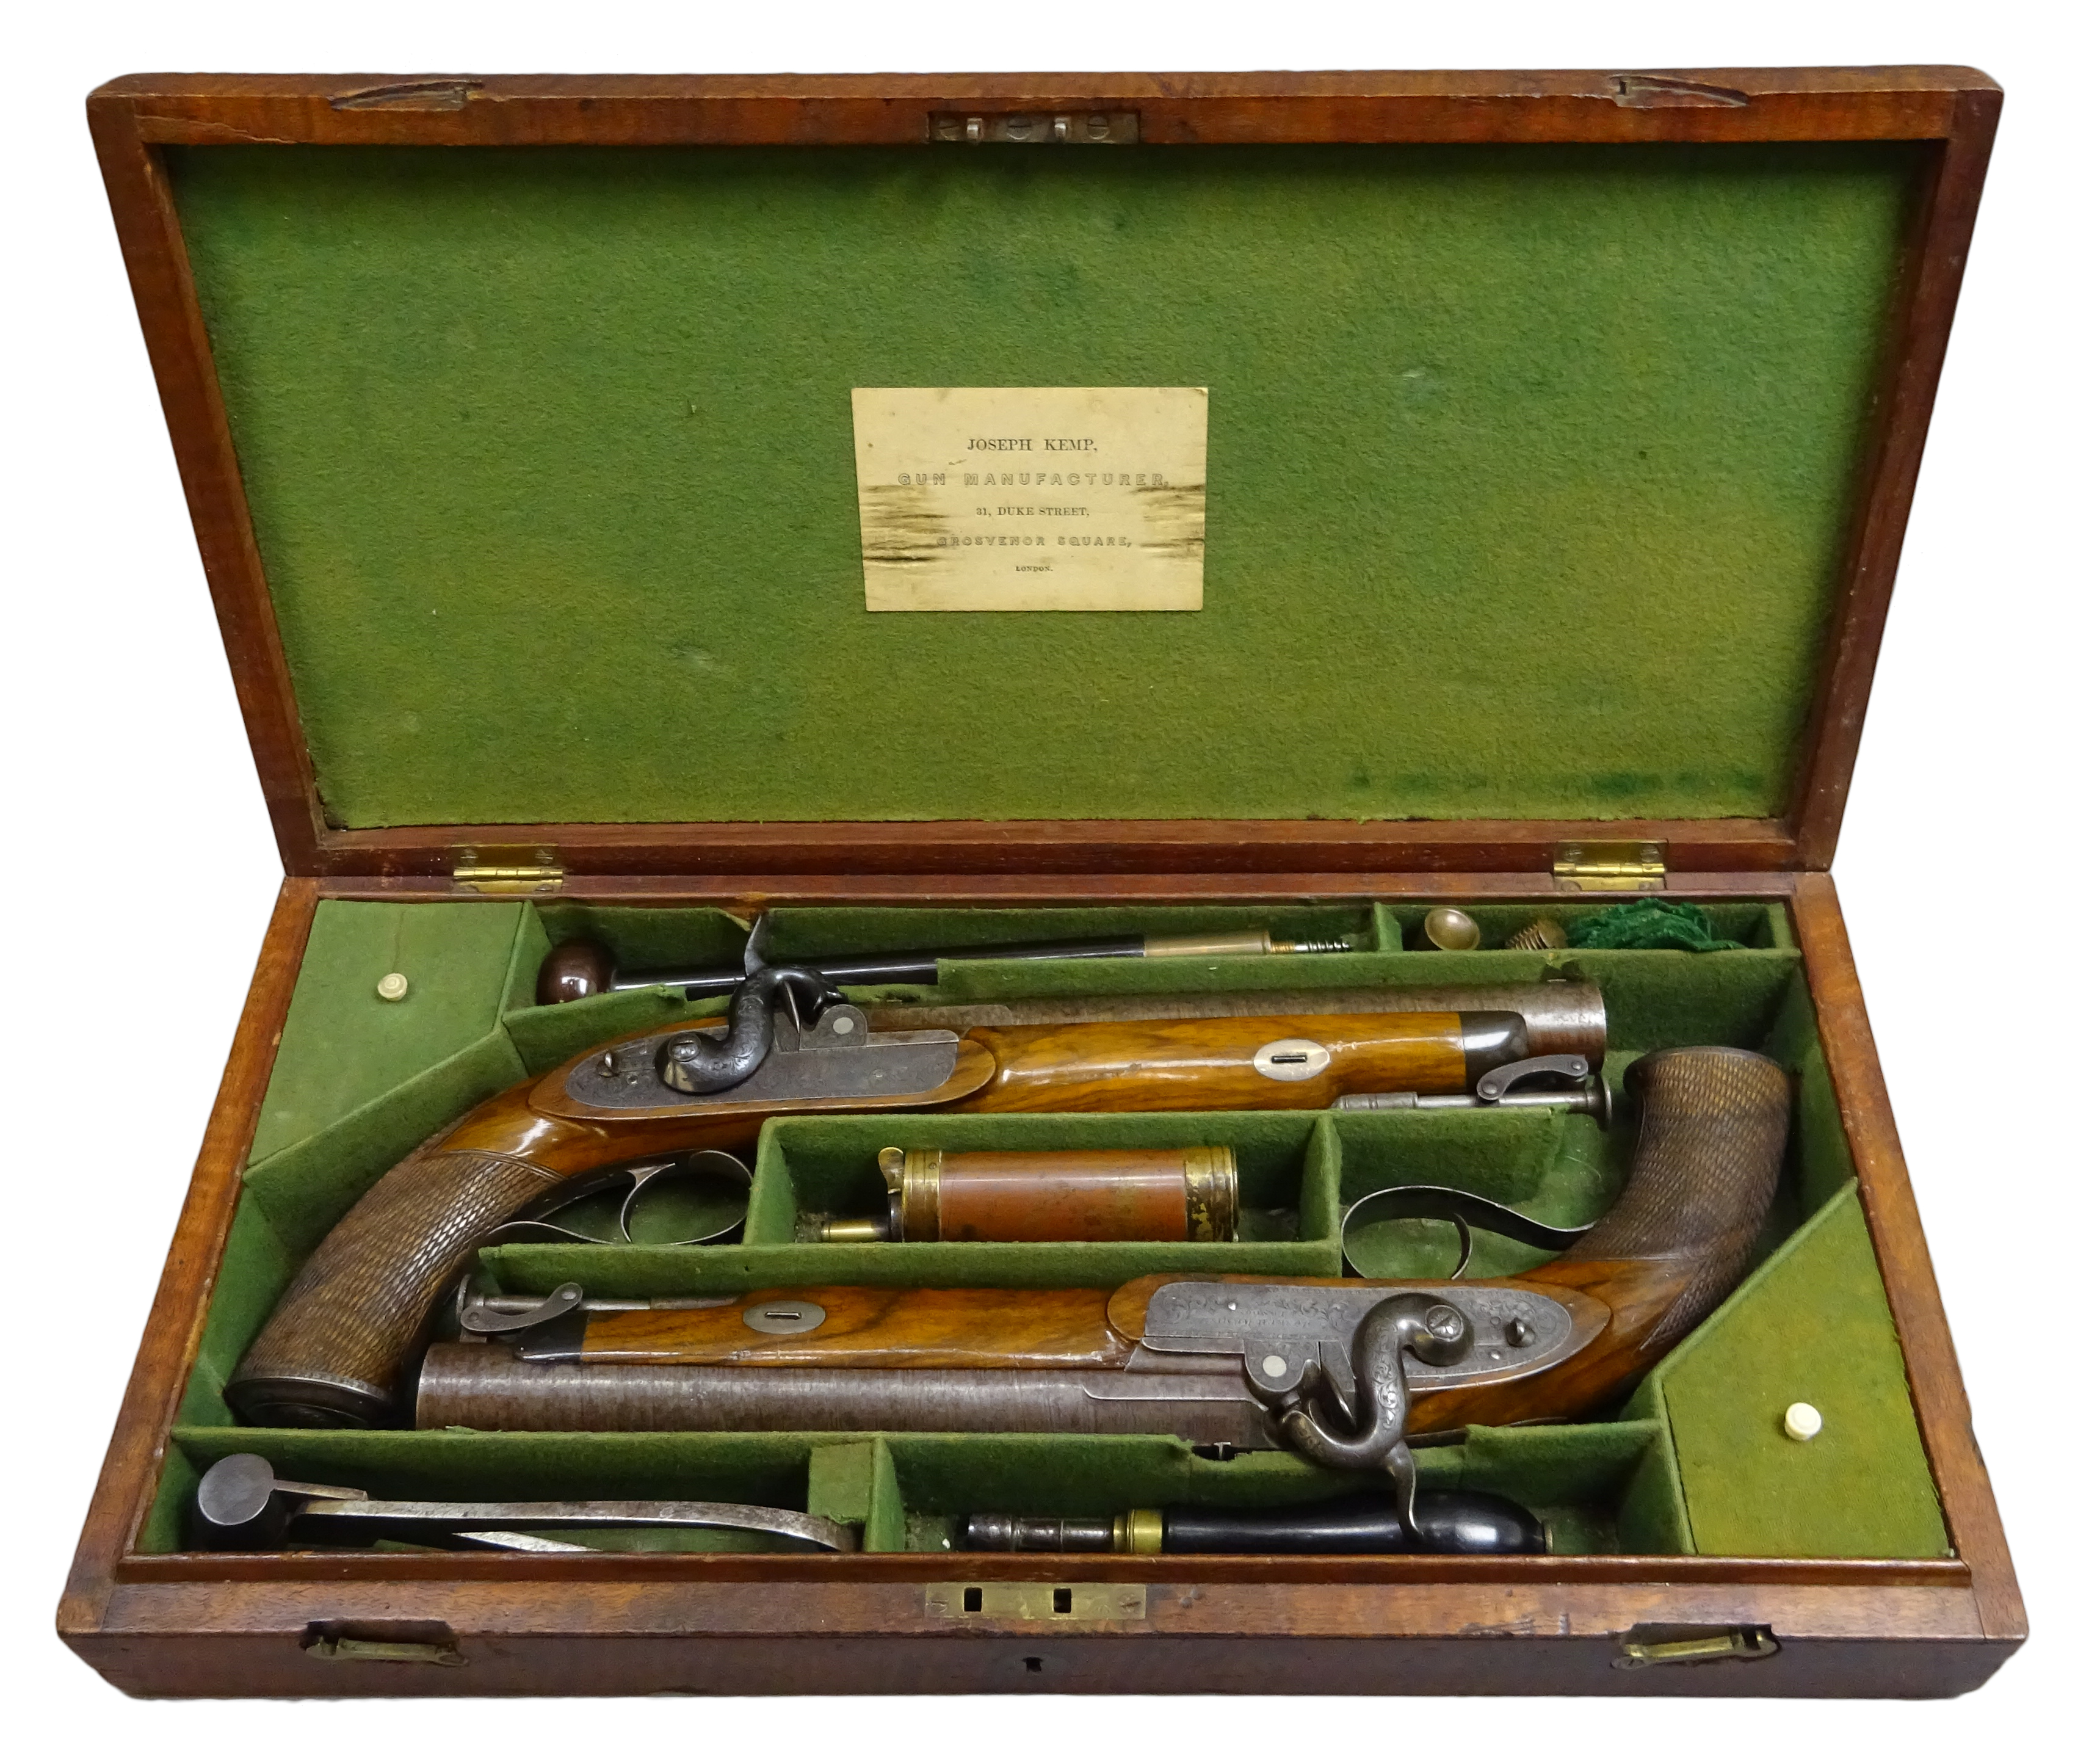 Fine pair of Officers's Percussion Pistols by Joseph Kemp, 31 Duke St, Grpsvenor Square, London, No.